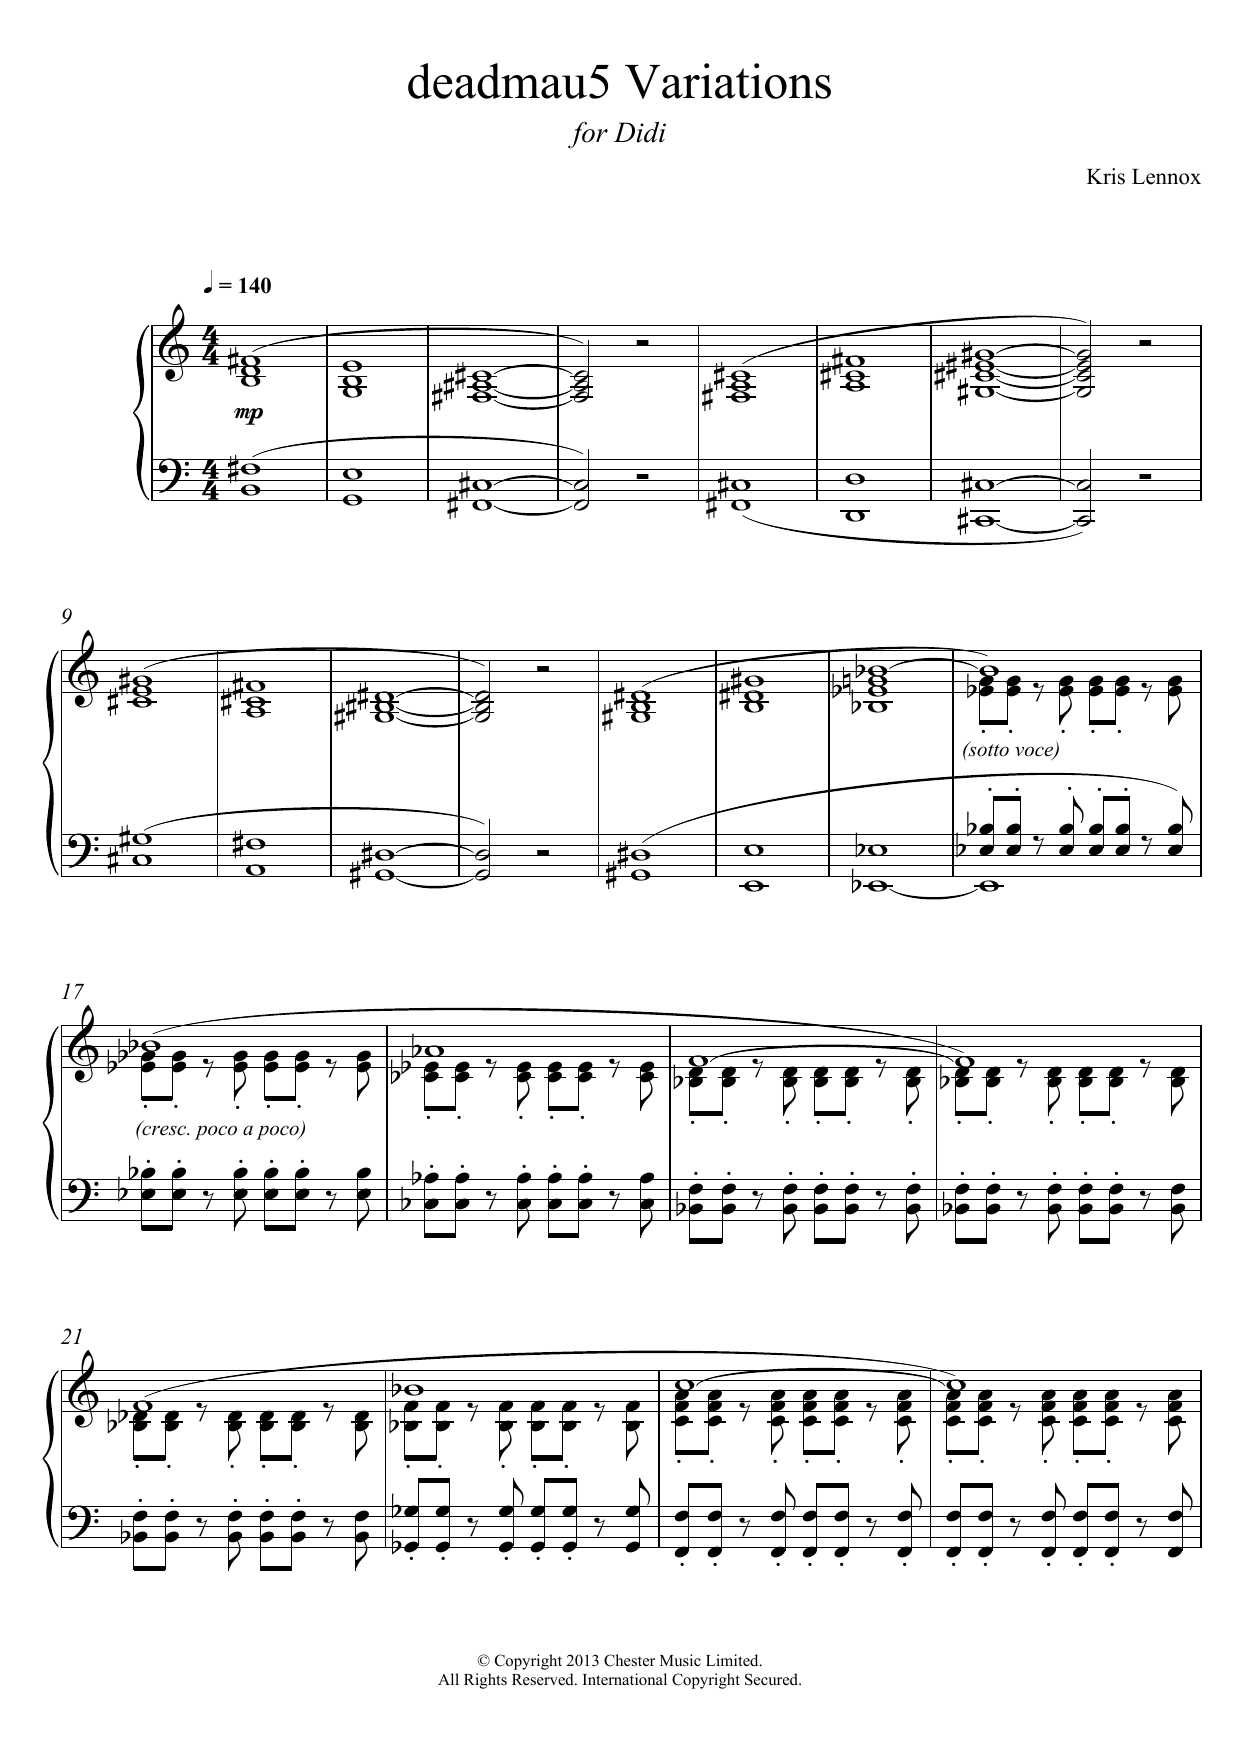 Download Kris Lennox Deadmau5 Variations Sheet Music